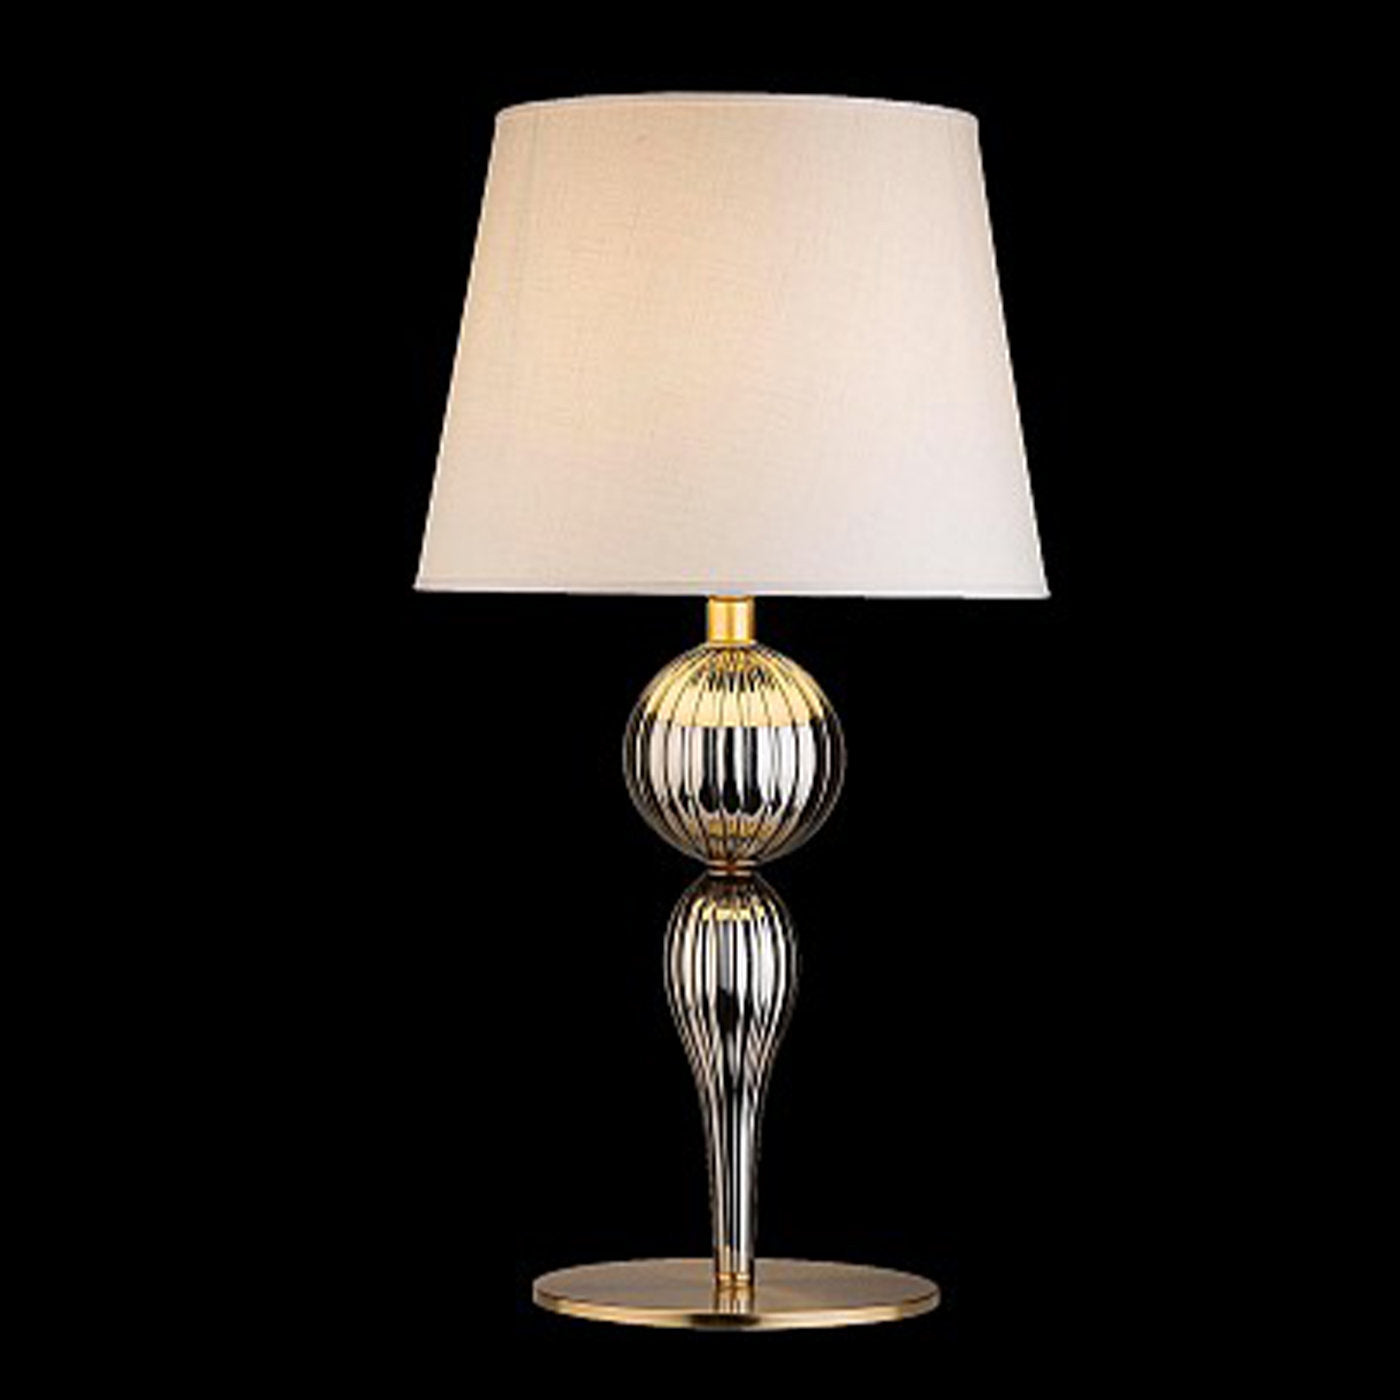 Royal Table Lamp - Alternative view 1